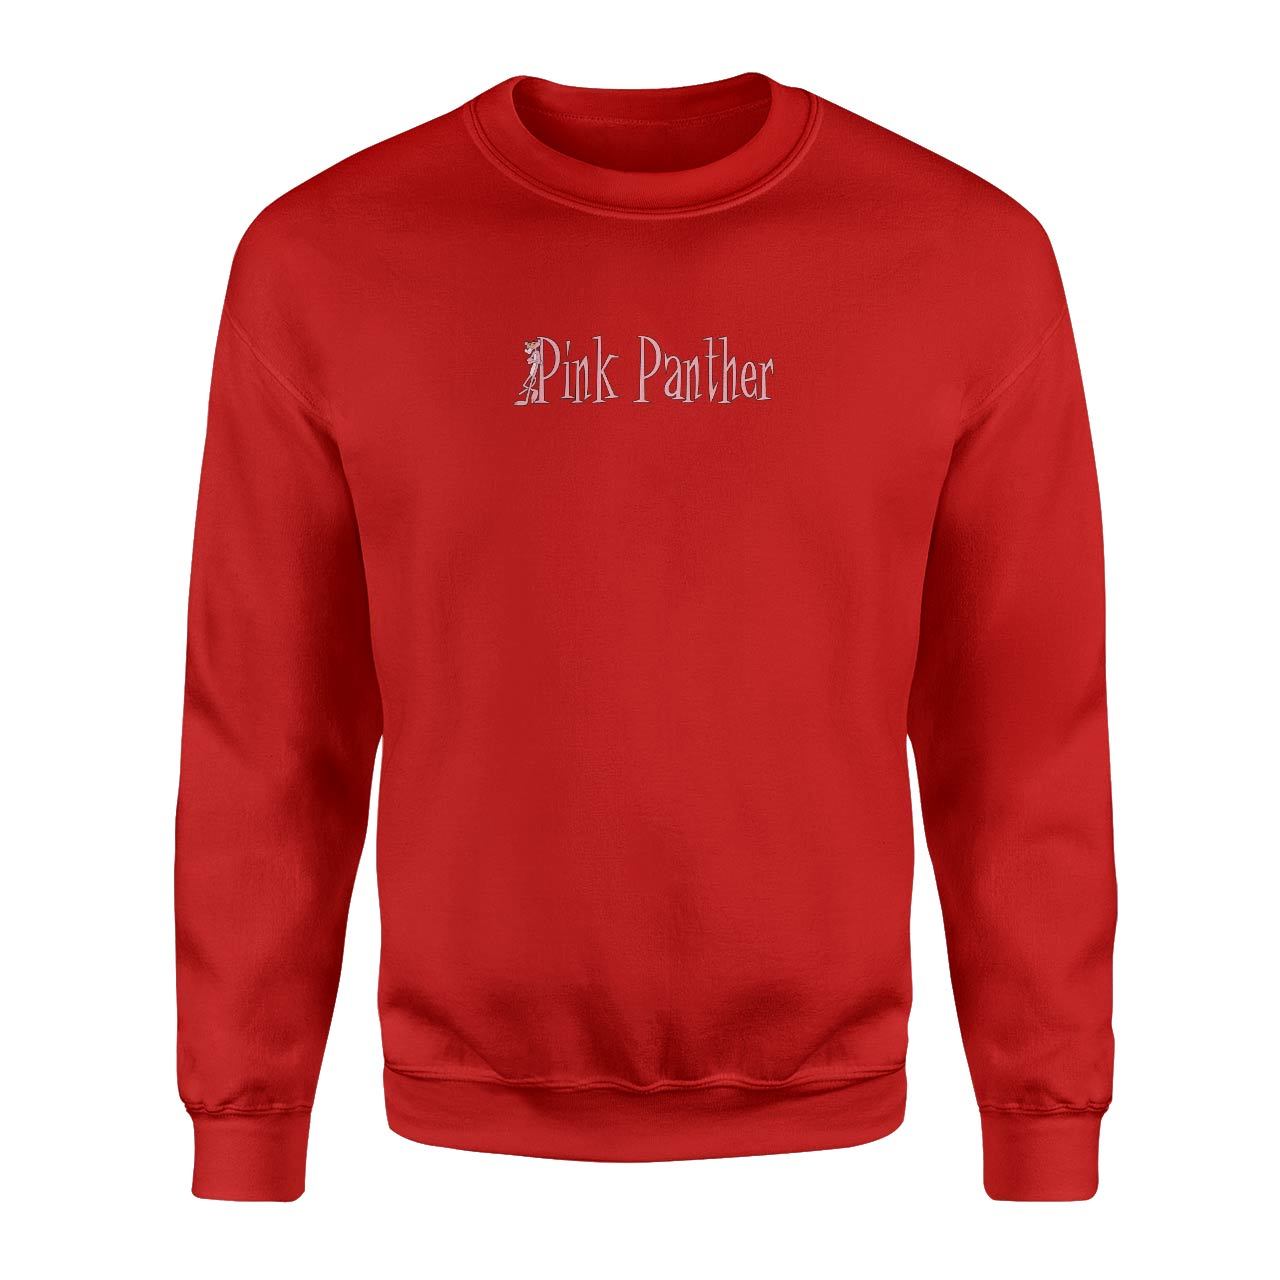 Pembe Panter Kırmızı Sweatshirt